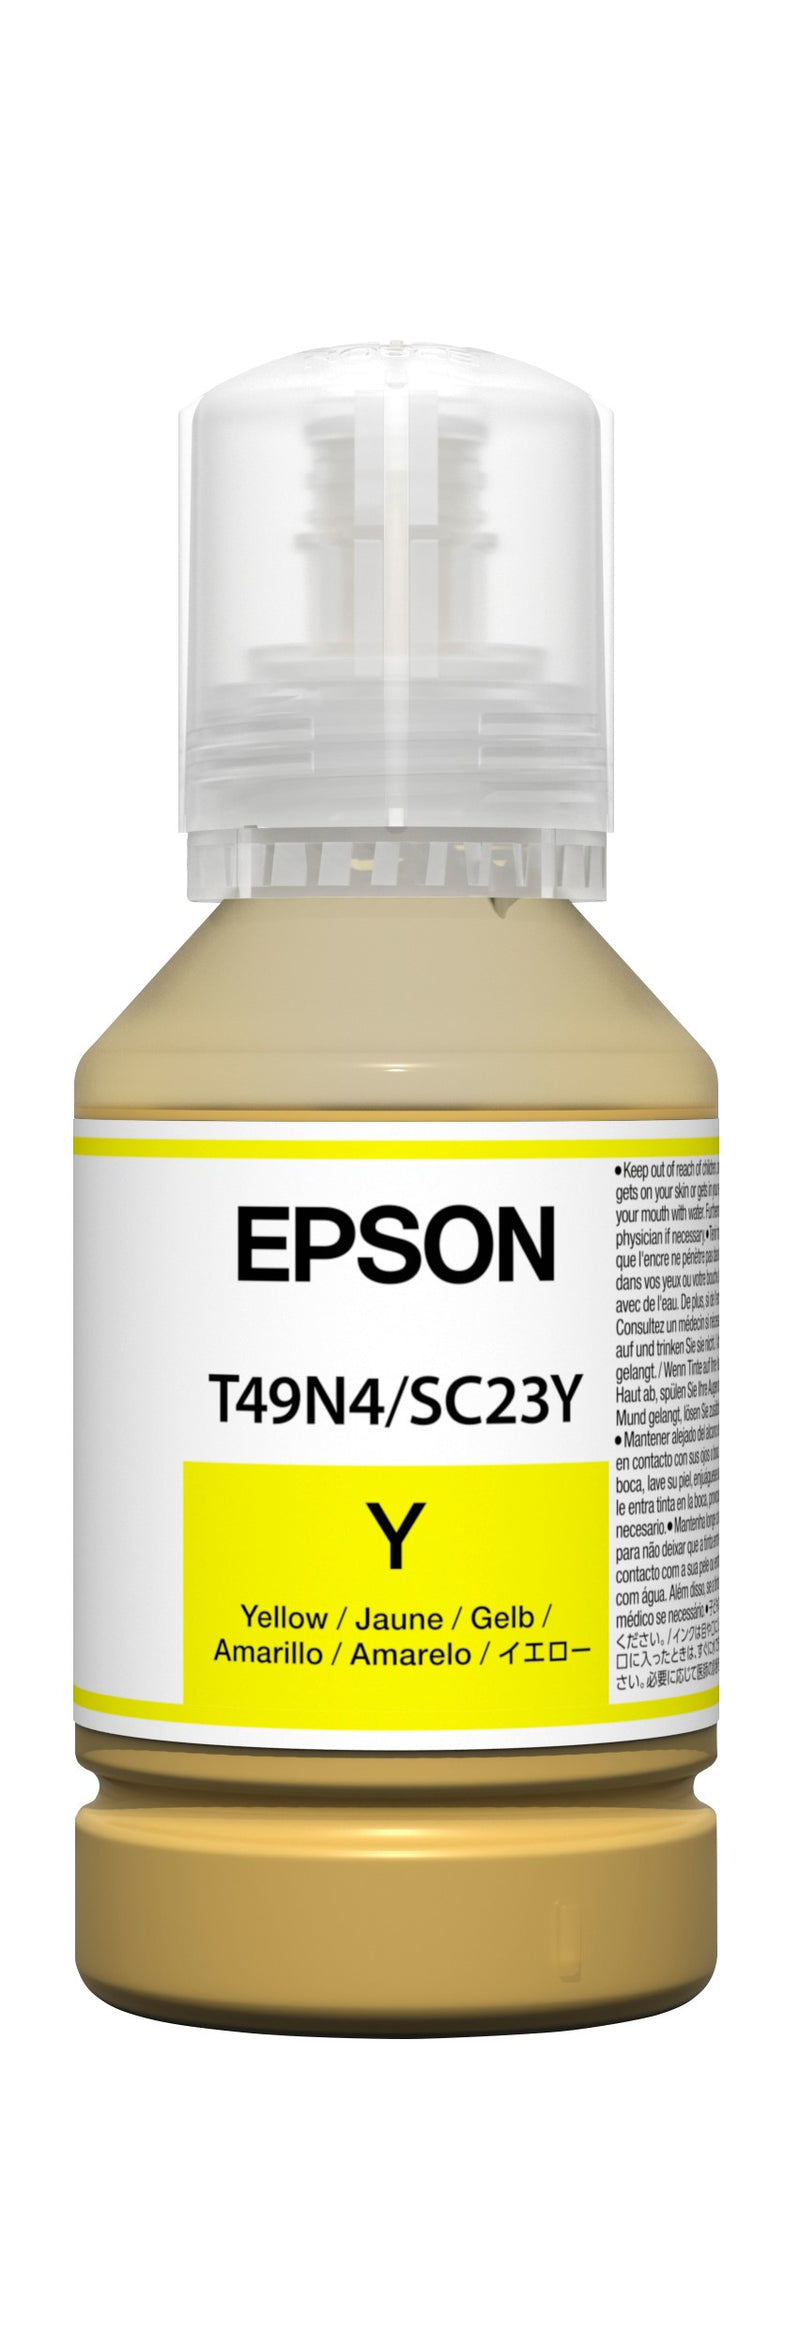 Epson C13T49H400 recarga de tinteiro de impressora